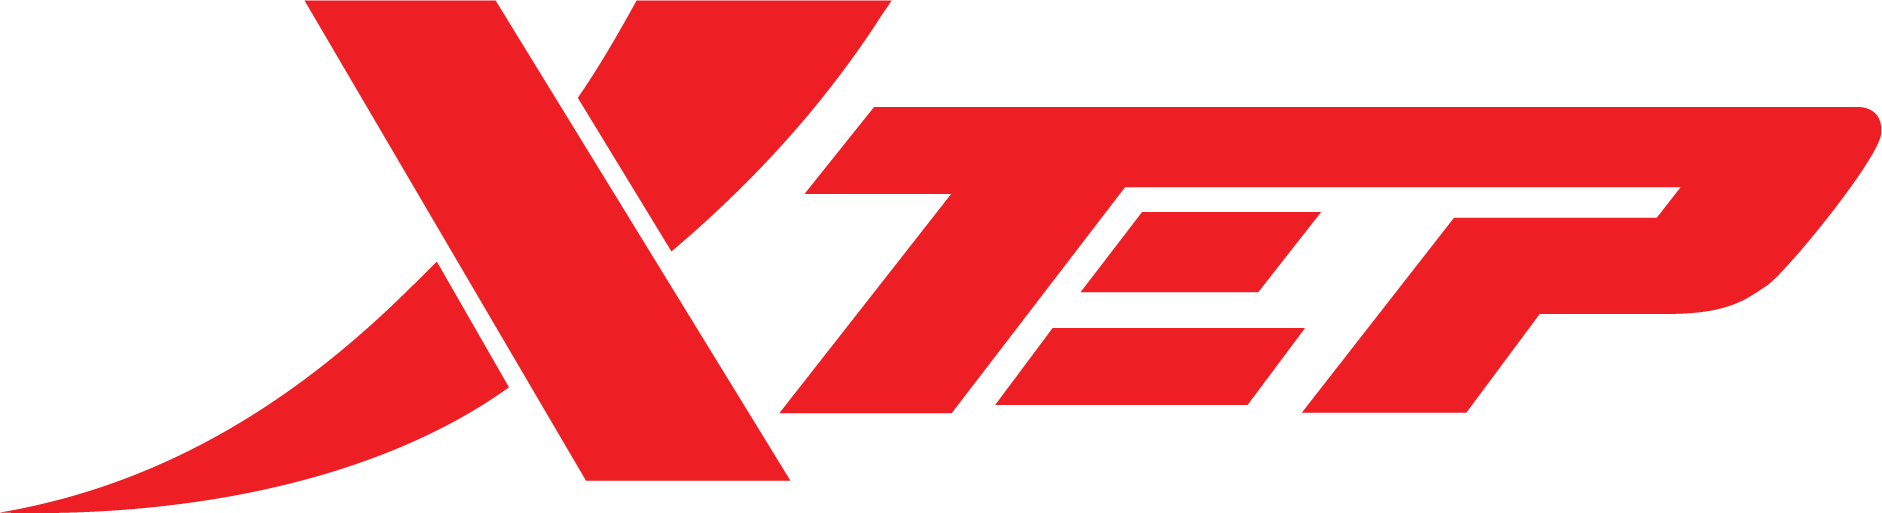 logo XTEP VIỆT NAM